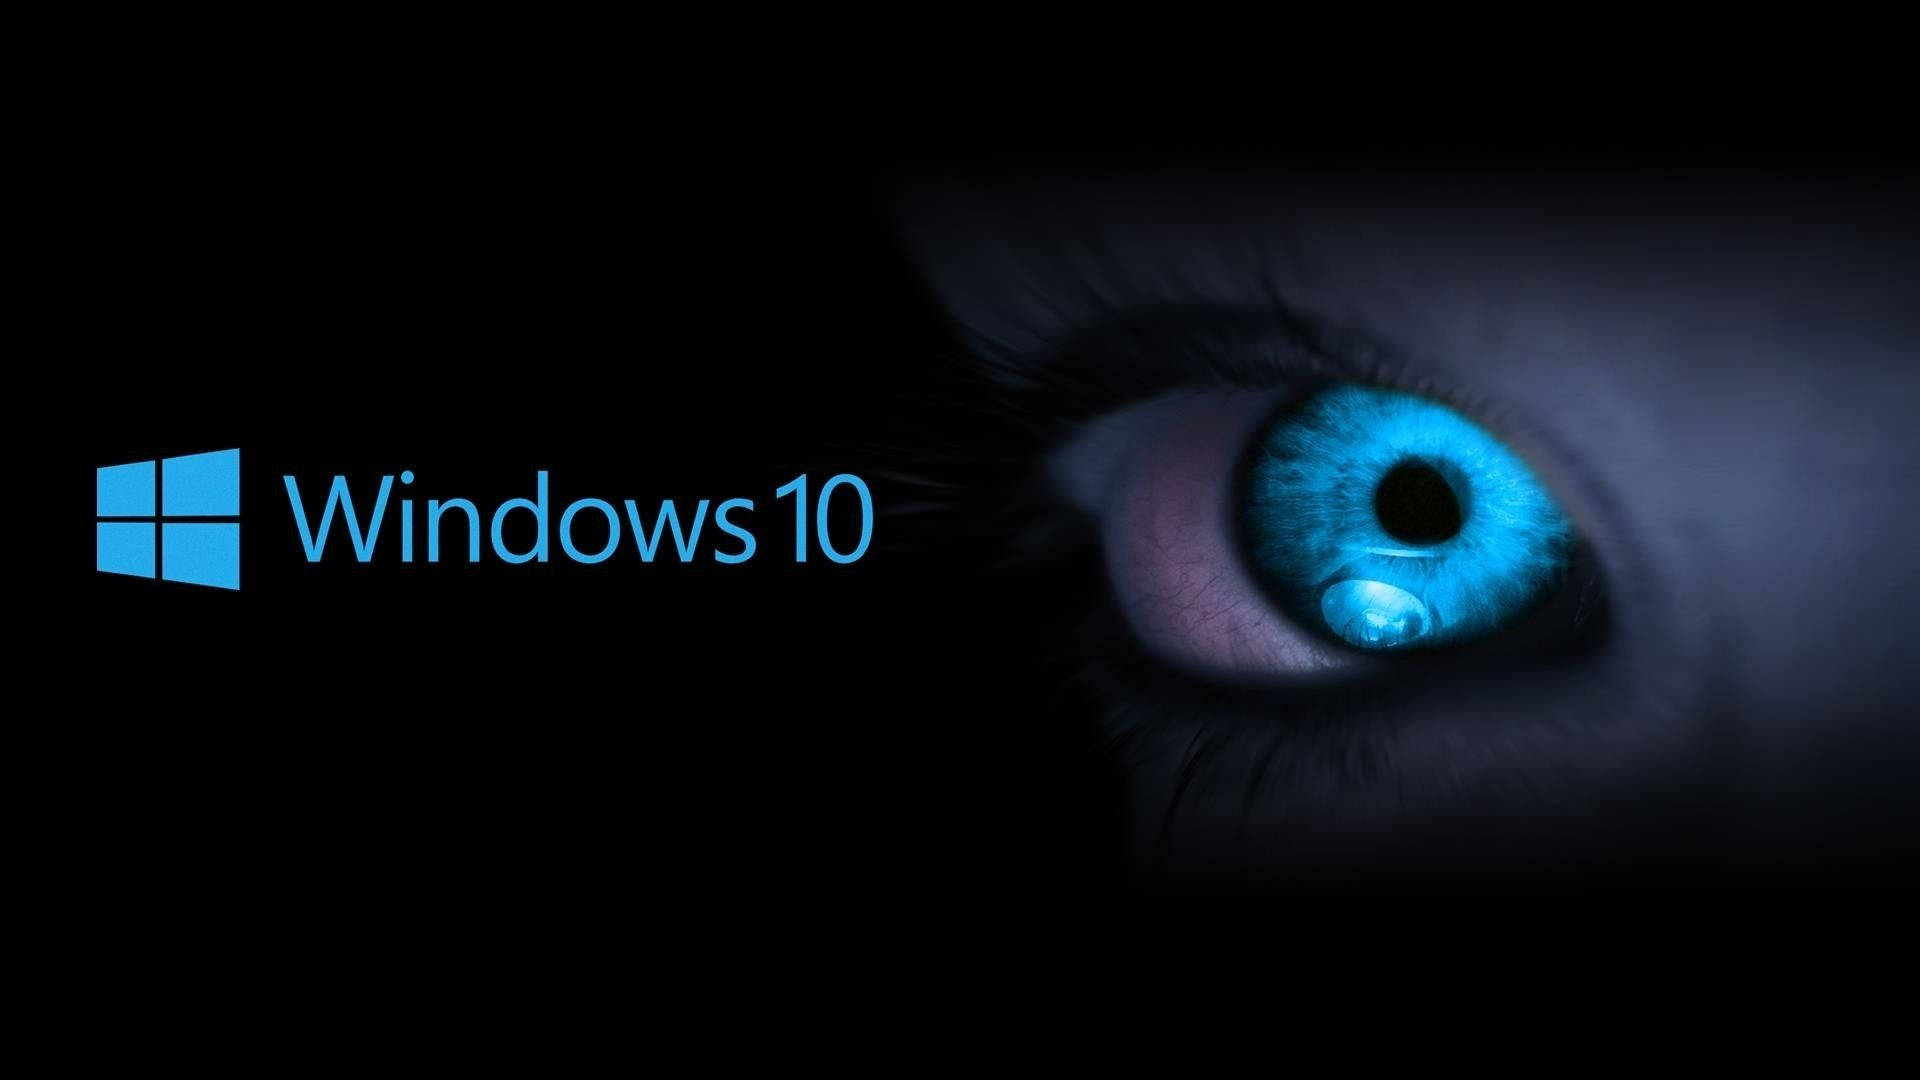 Windows 10 Hd Blue Eye